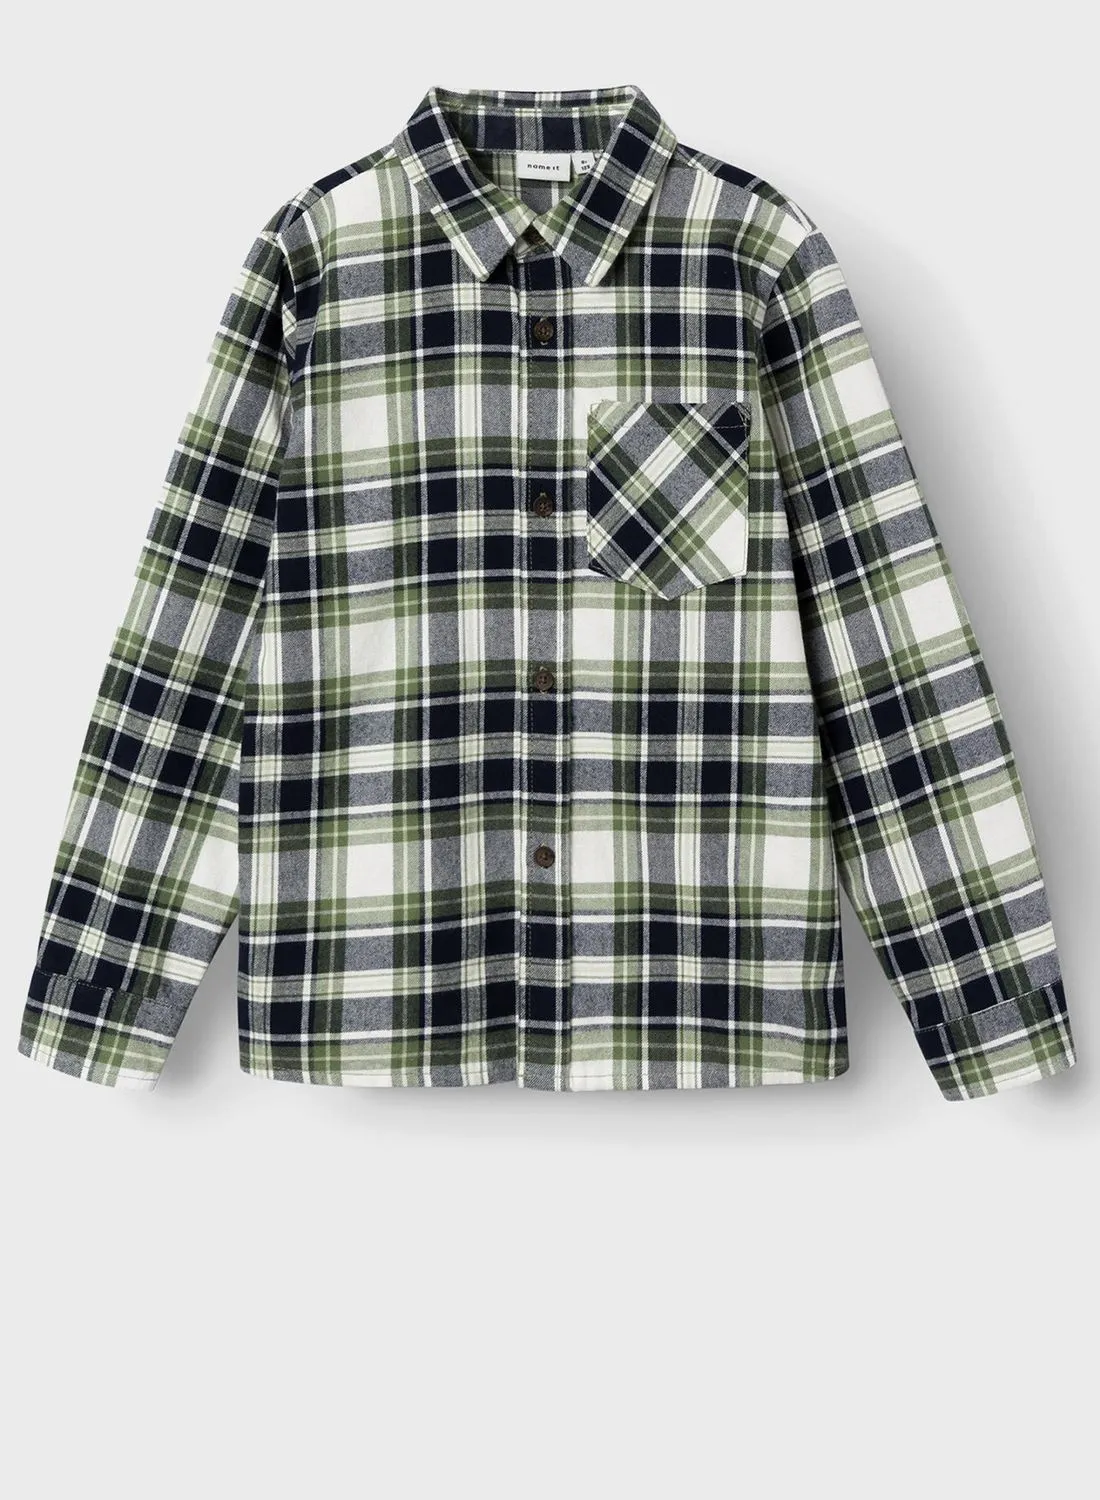 NAME IT Kids Checkered Shirt